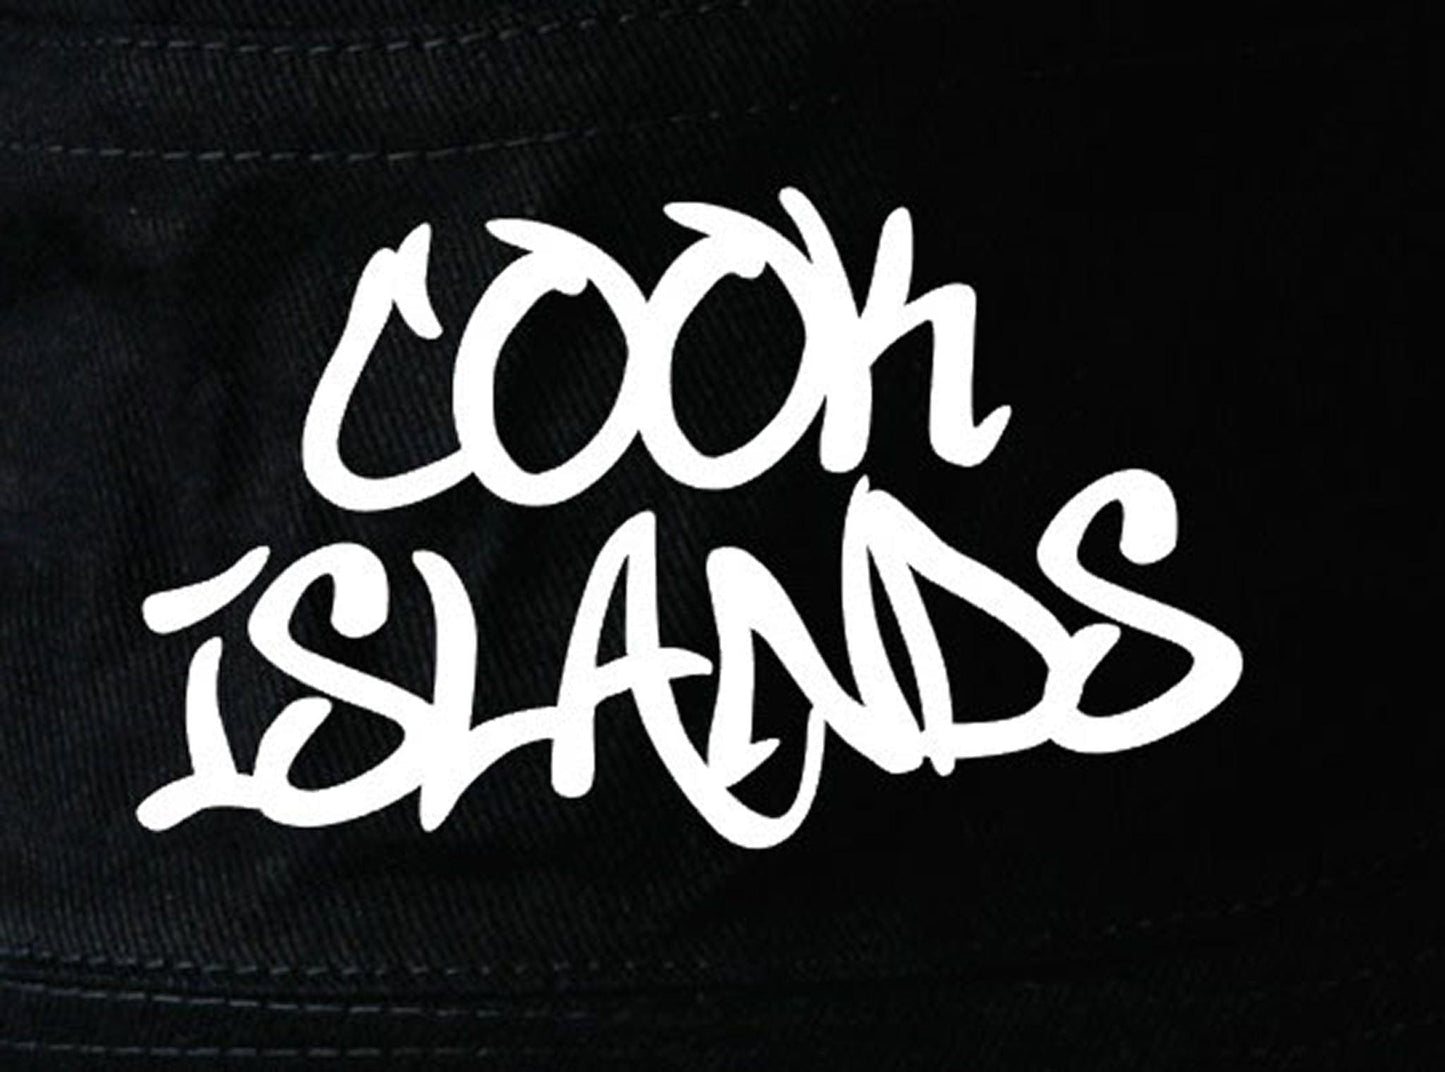 Cook Islands Soft Cotton Bucket Hat